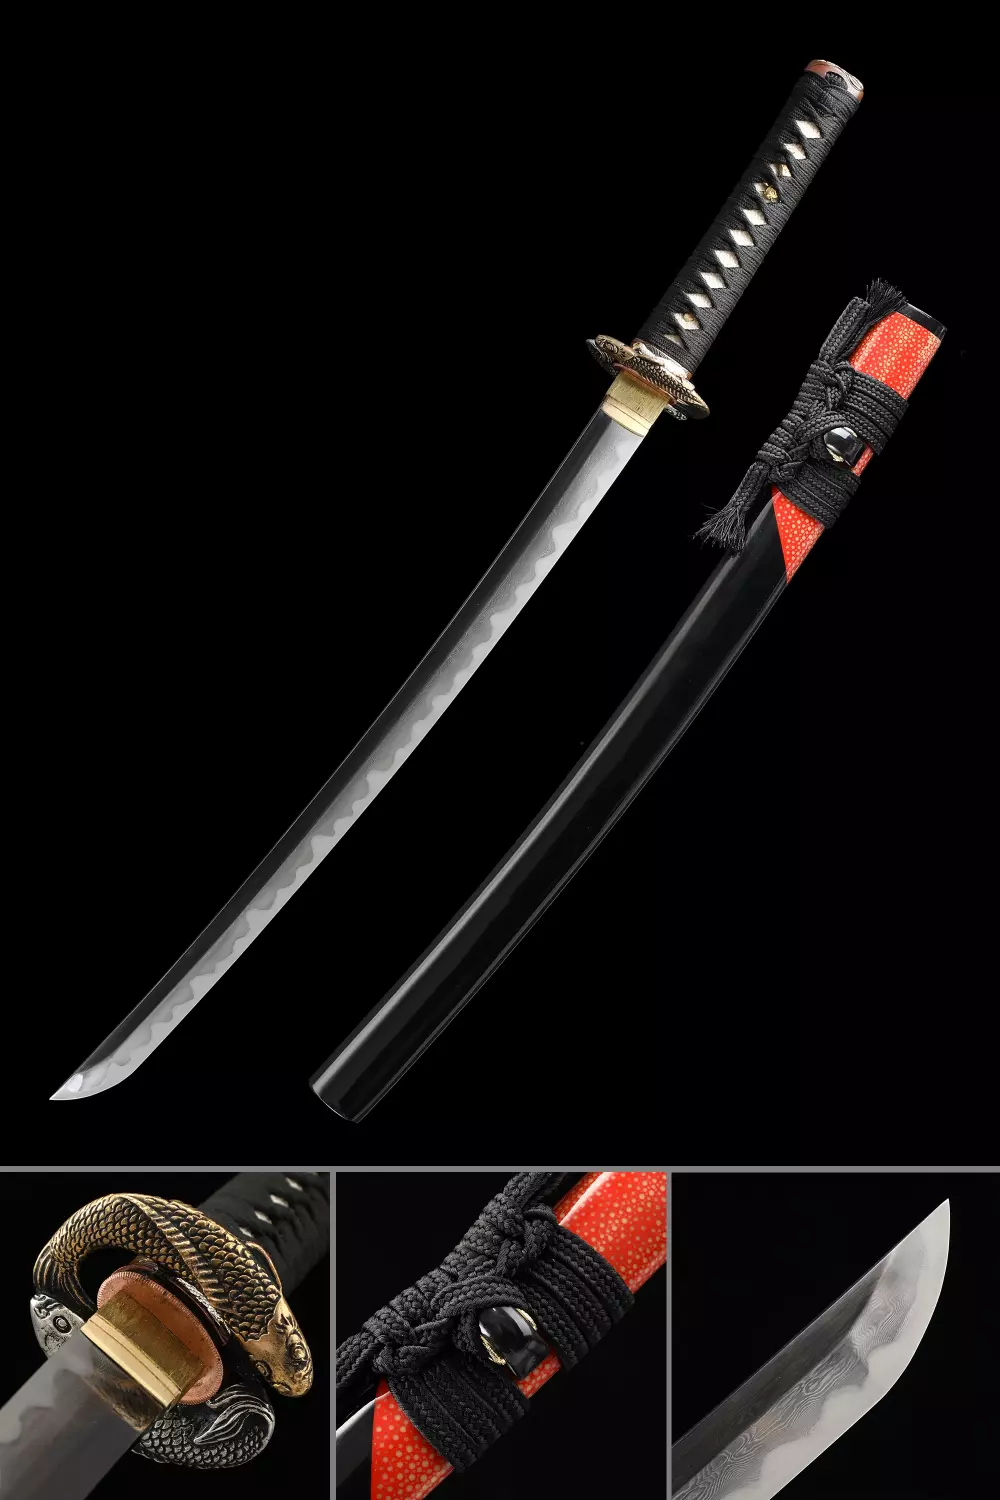 Real Katana Swords